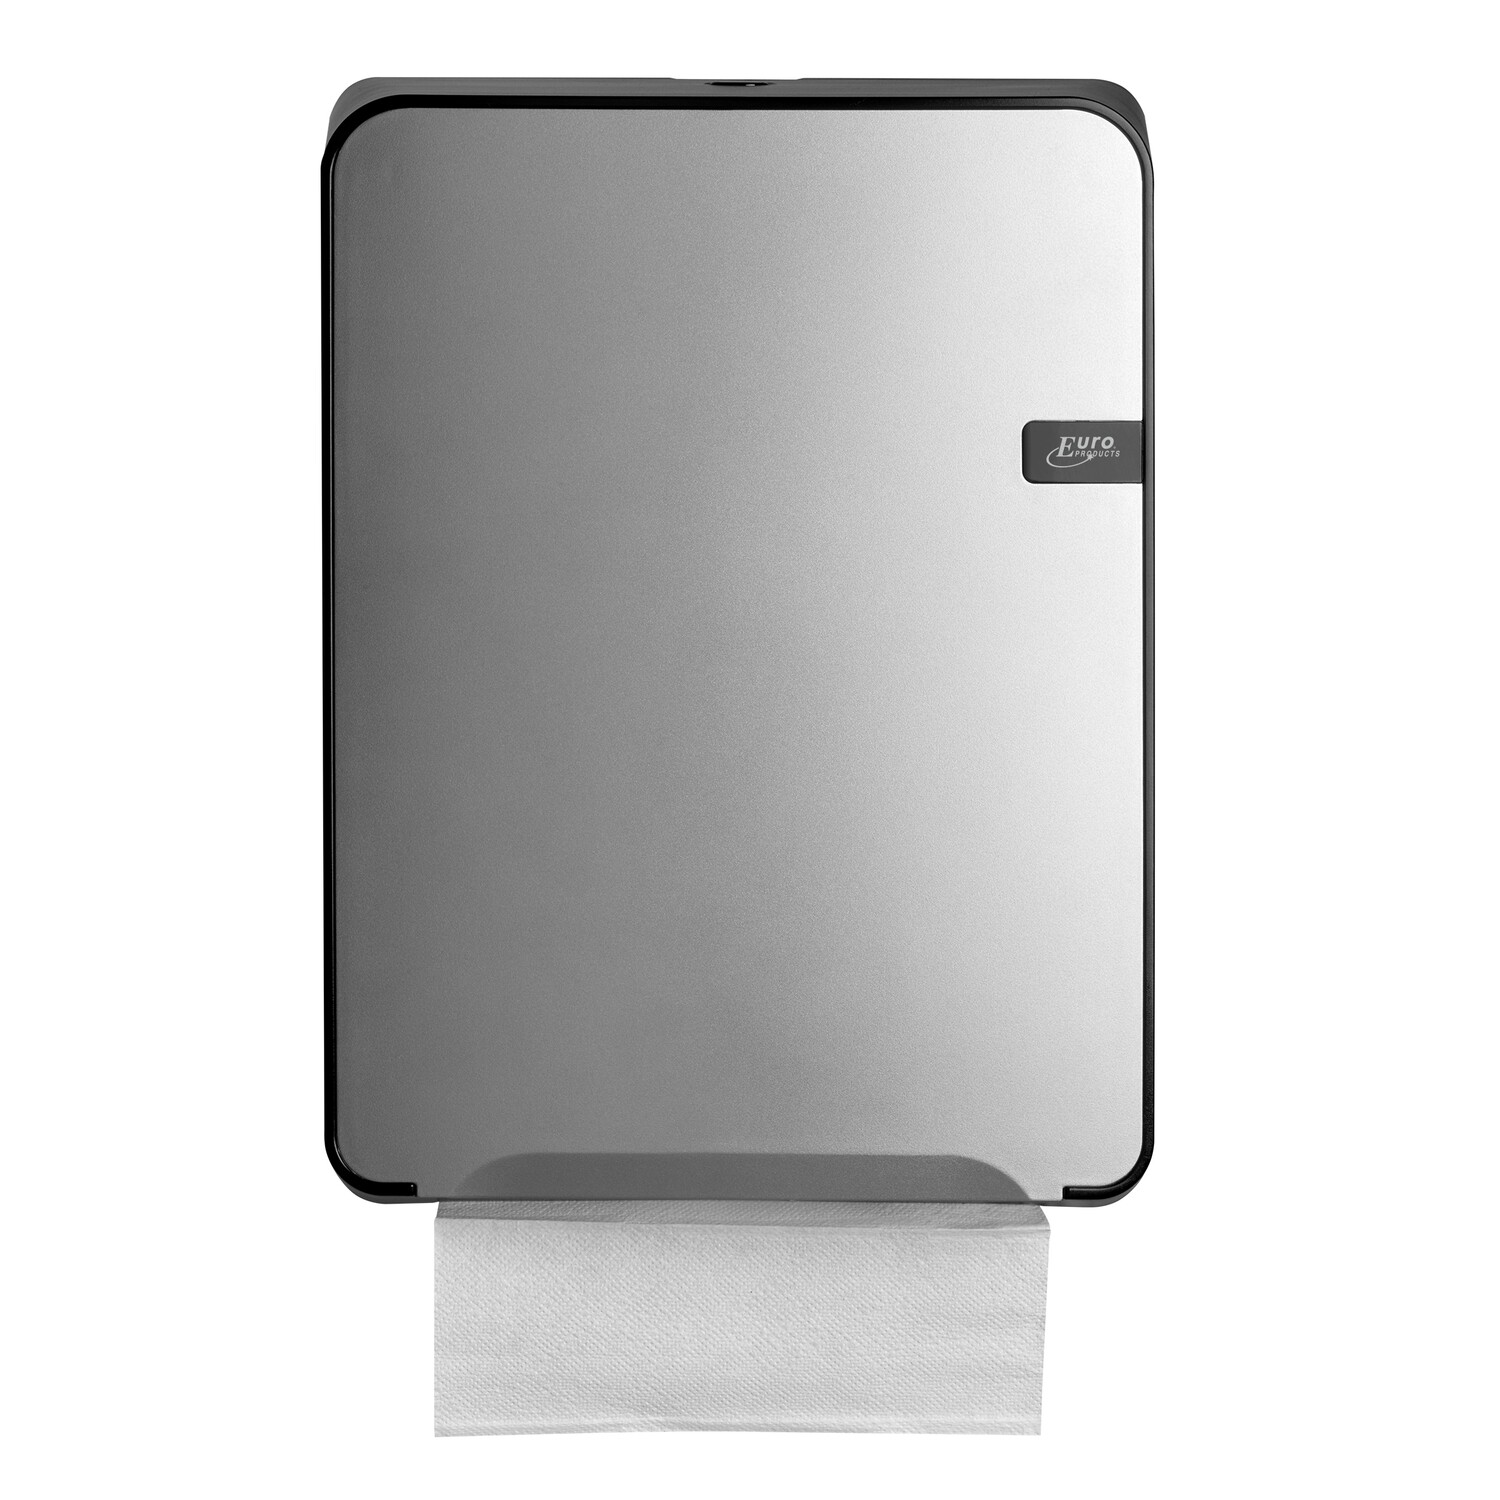 Euro Silver Quartz handdoekdispenser, verpakt per stuk